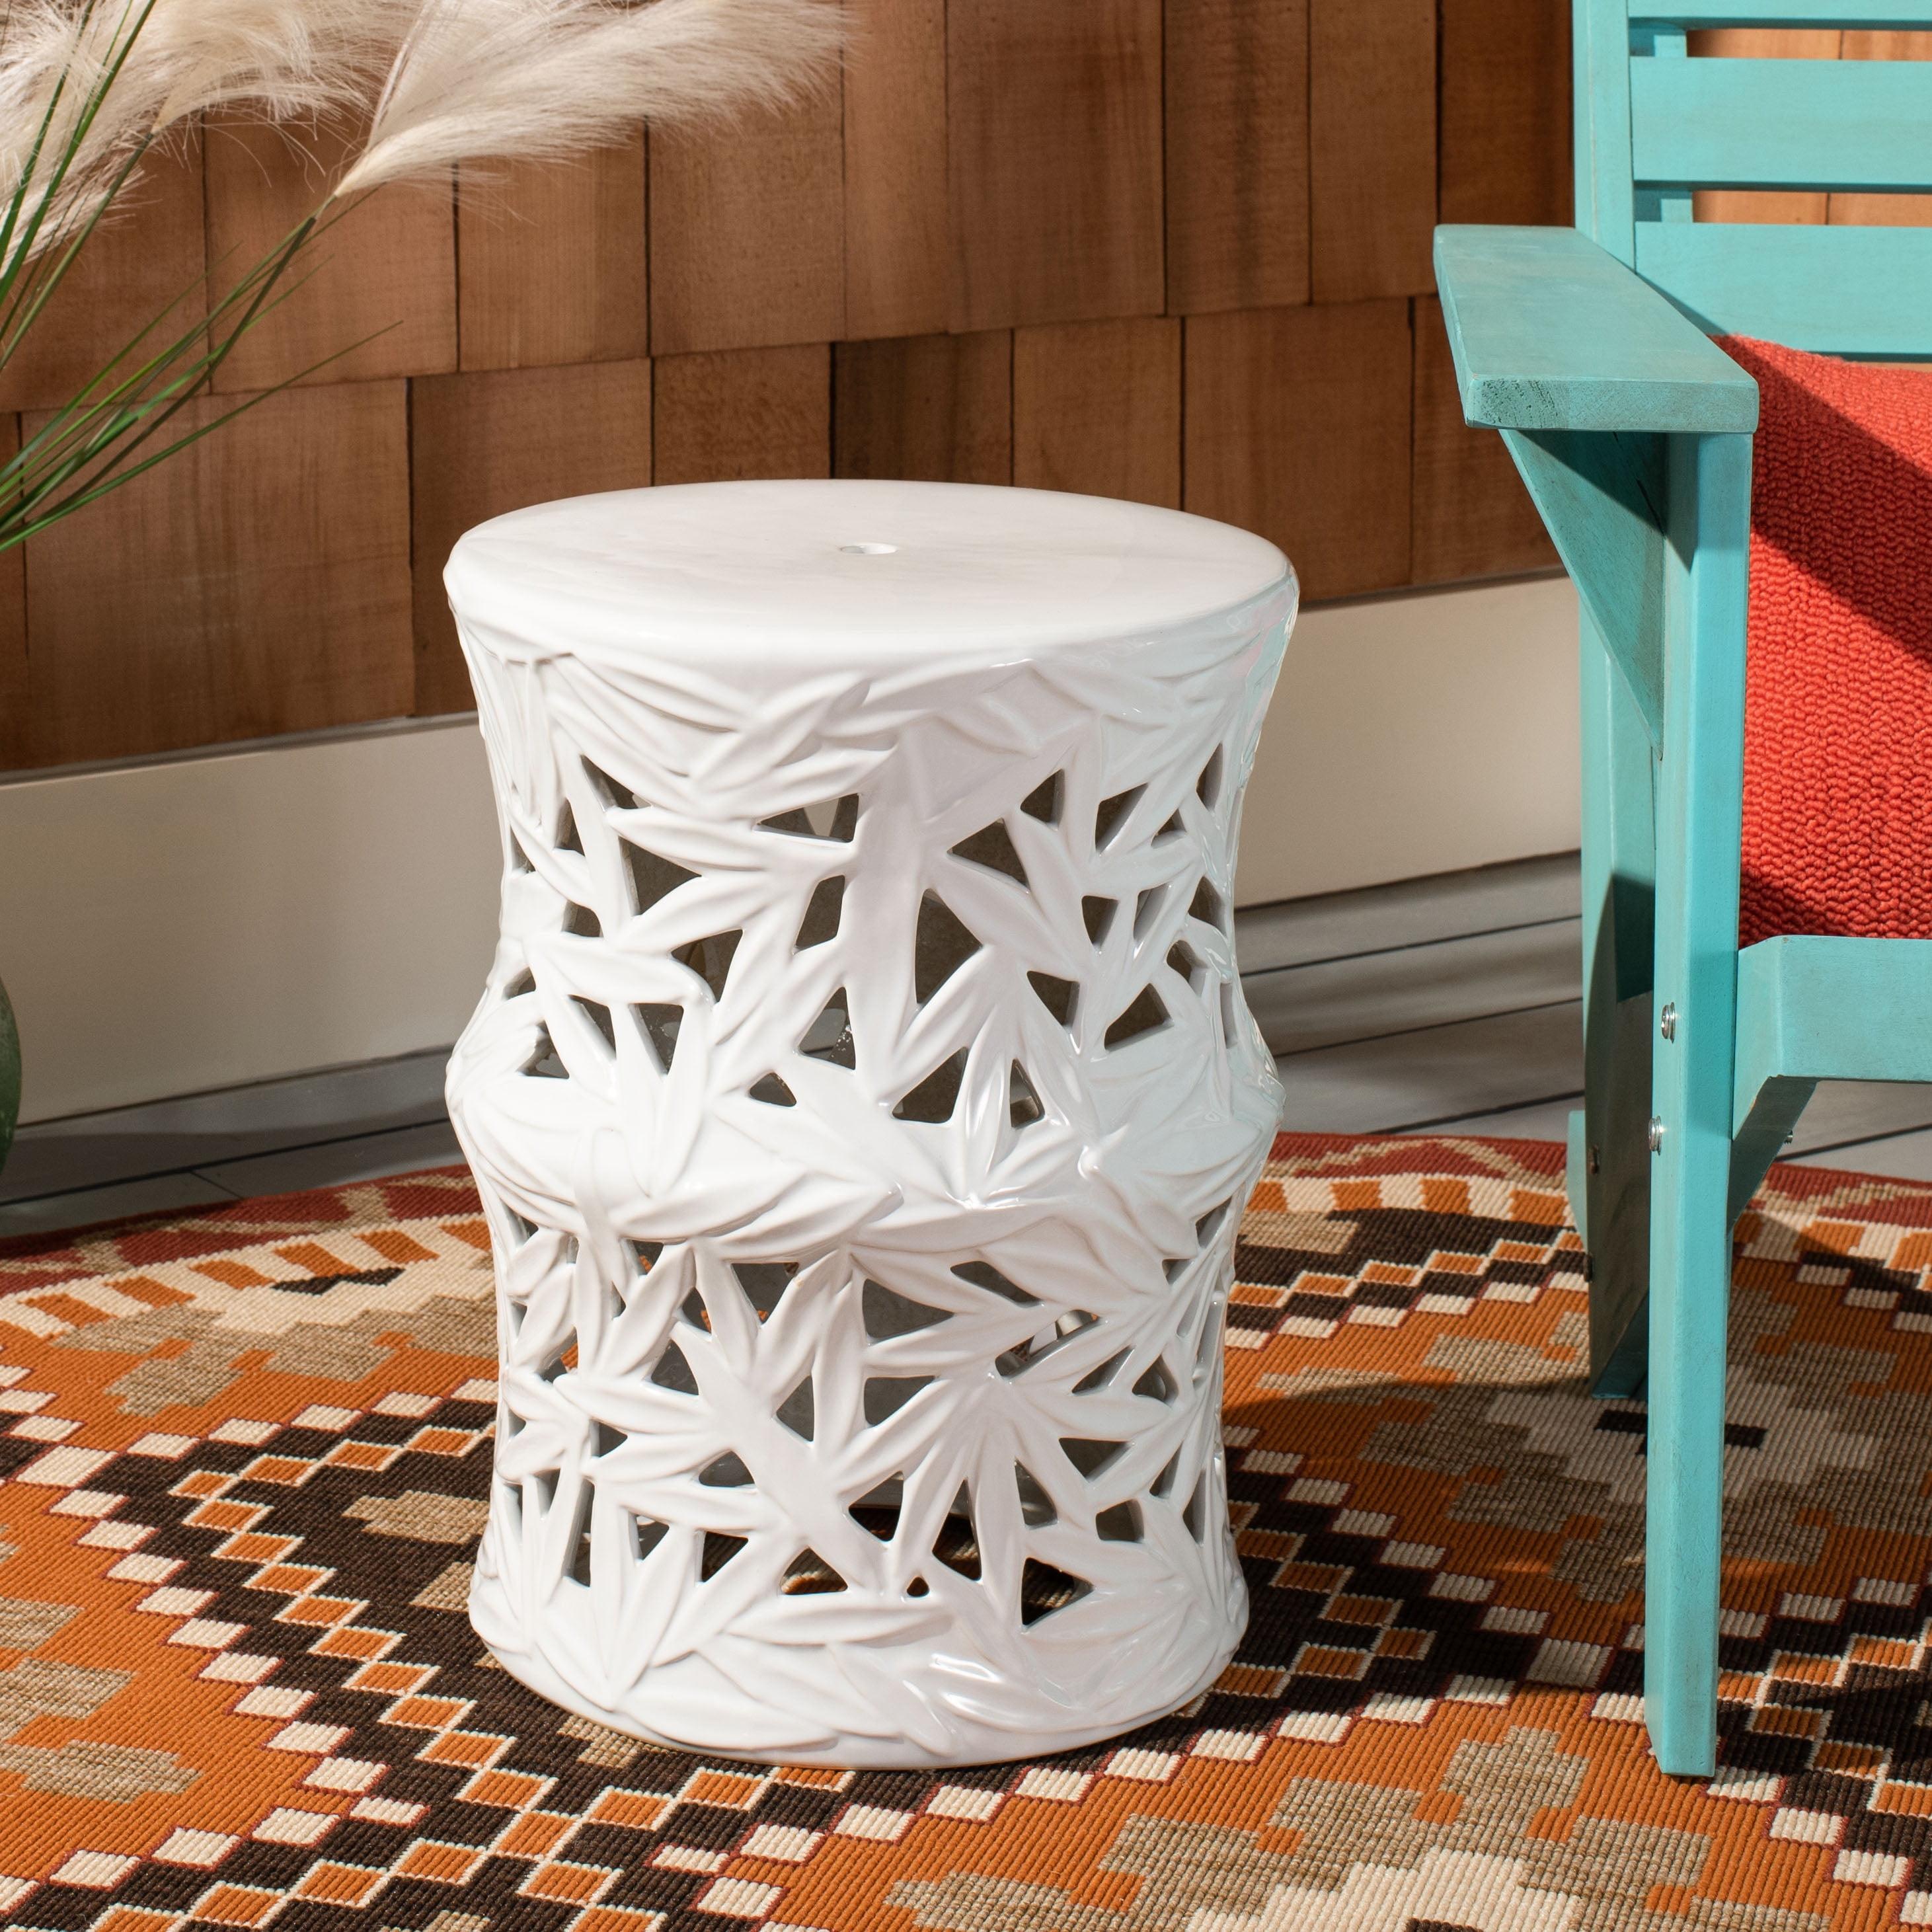 Granda White Ceramic Garden Stool with Tropical Cut-Out Design